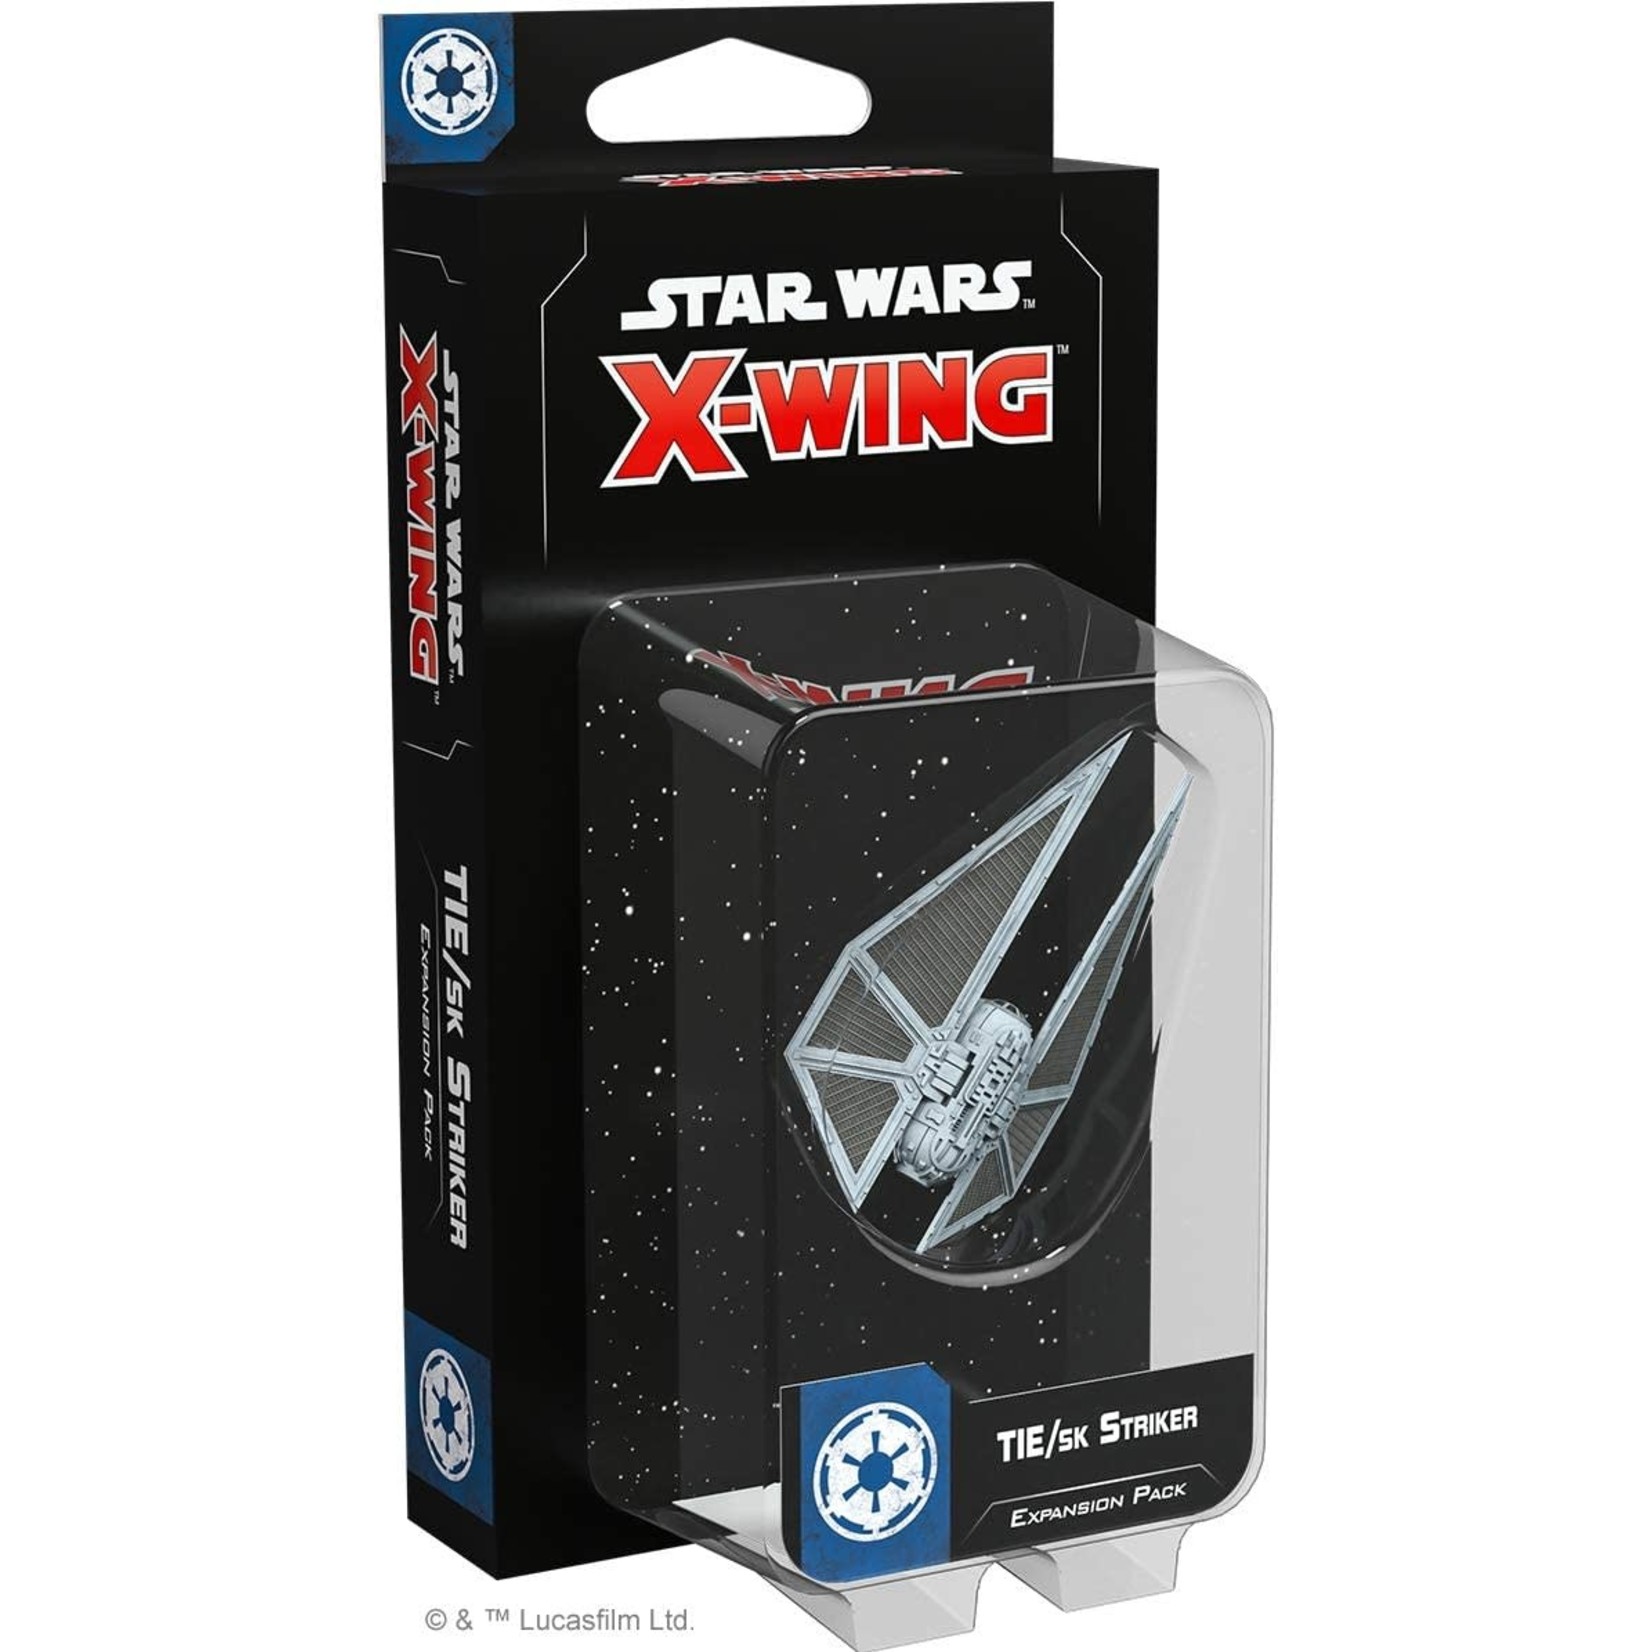 Star Wars X-Wing 2e: TIE/sk Striker Expansion Pack